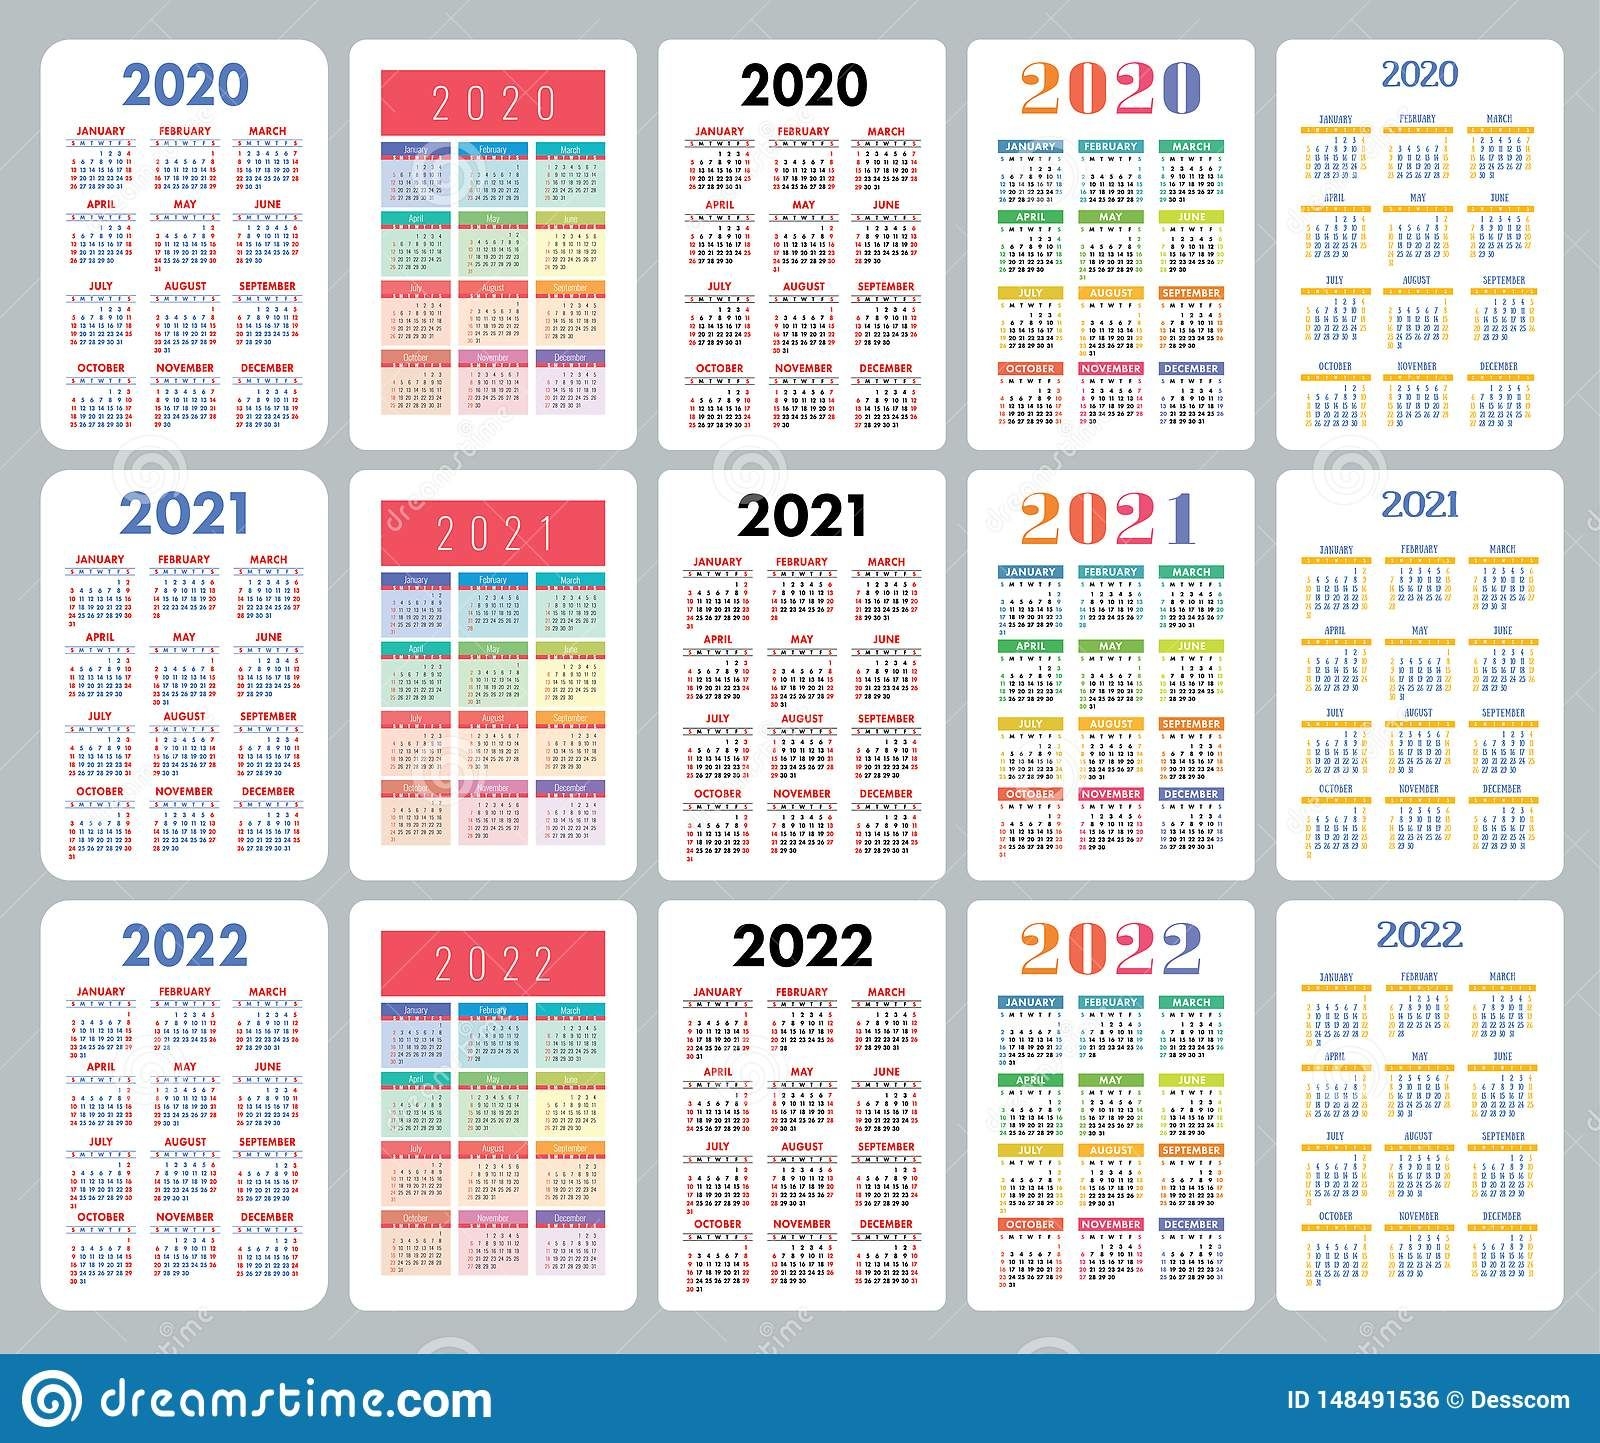 Calendar 2020, 2021 And 2022 Years. Vertical Calender